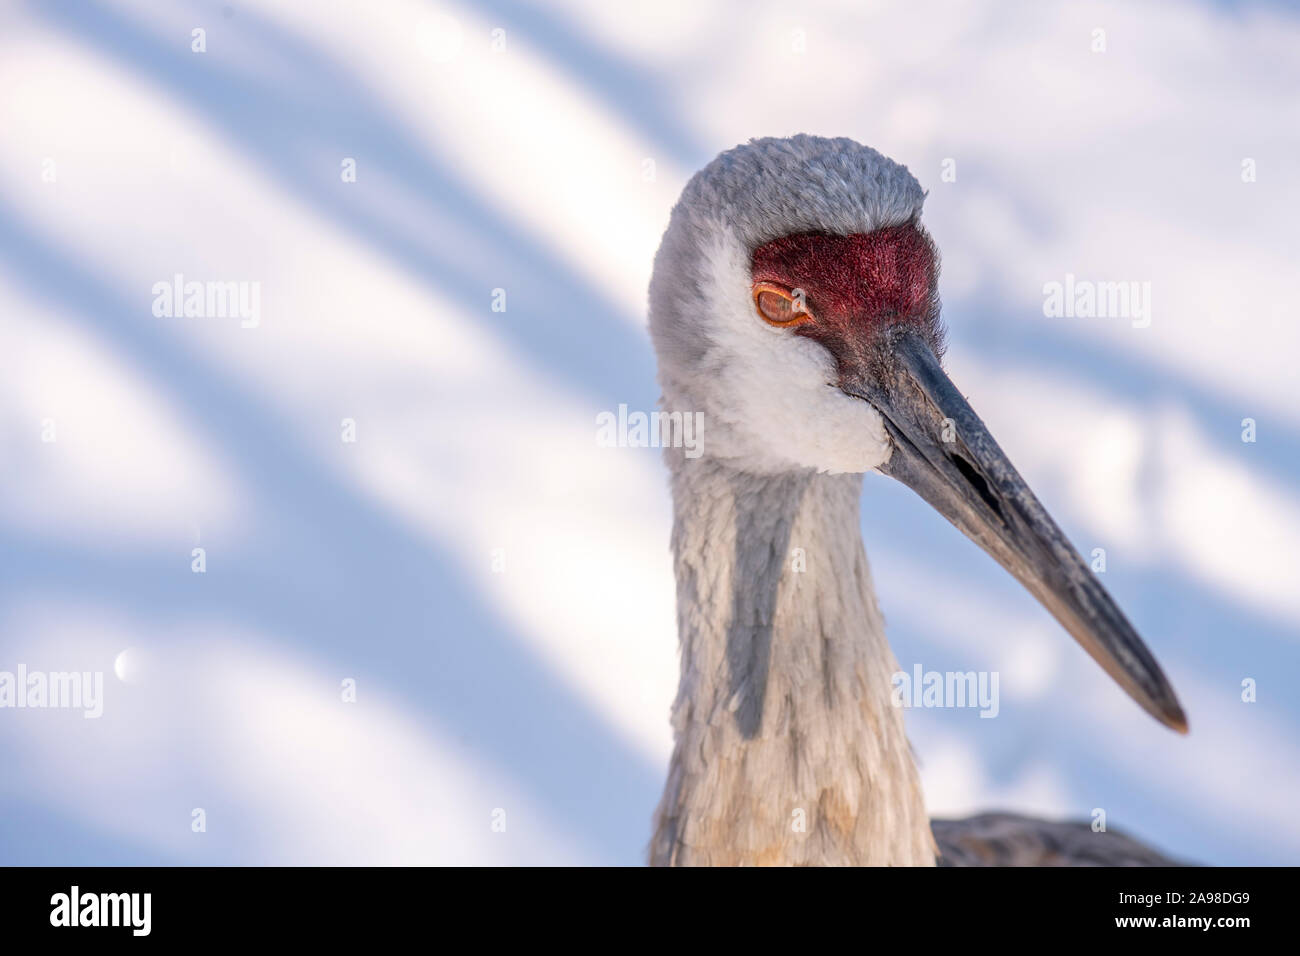 Closeup portrait of a Sandhill Crane (Antigone canadensis) against a white snowy background showing it's nictitating membrane (internal transparent th Stock Photo